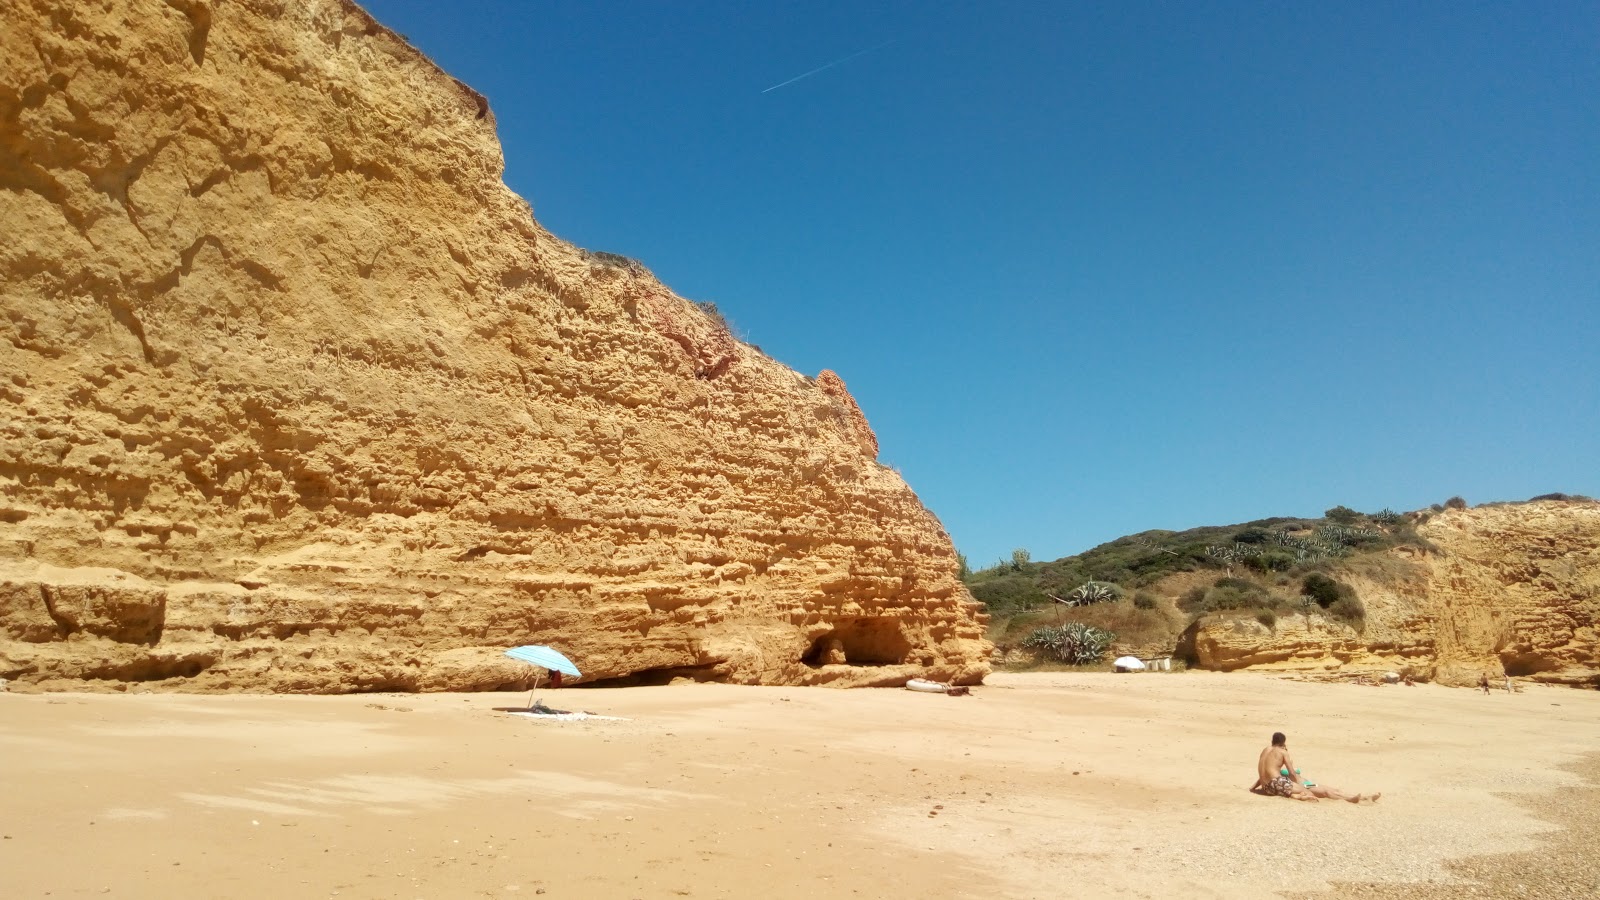 Foto di Cala del Puntalejo con una superficie del sabbia luminosa